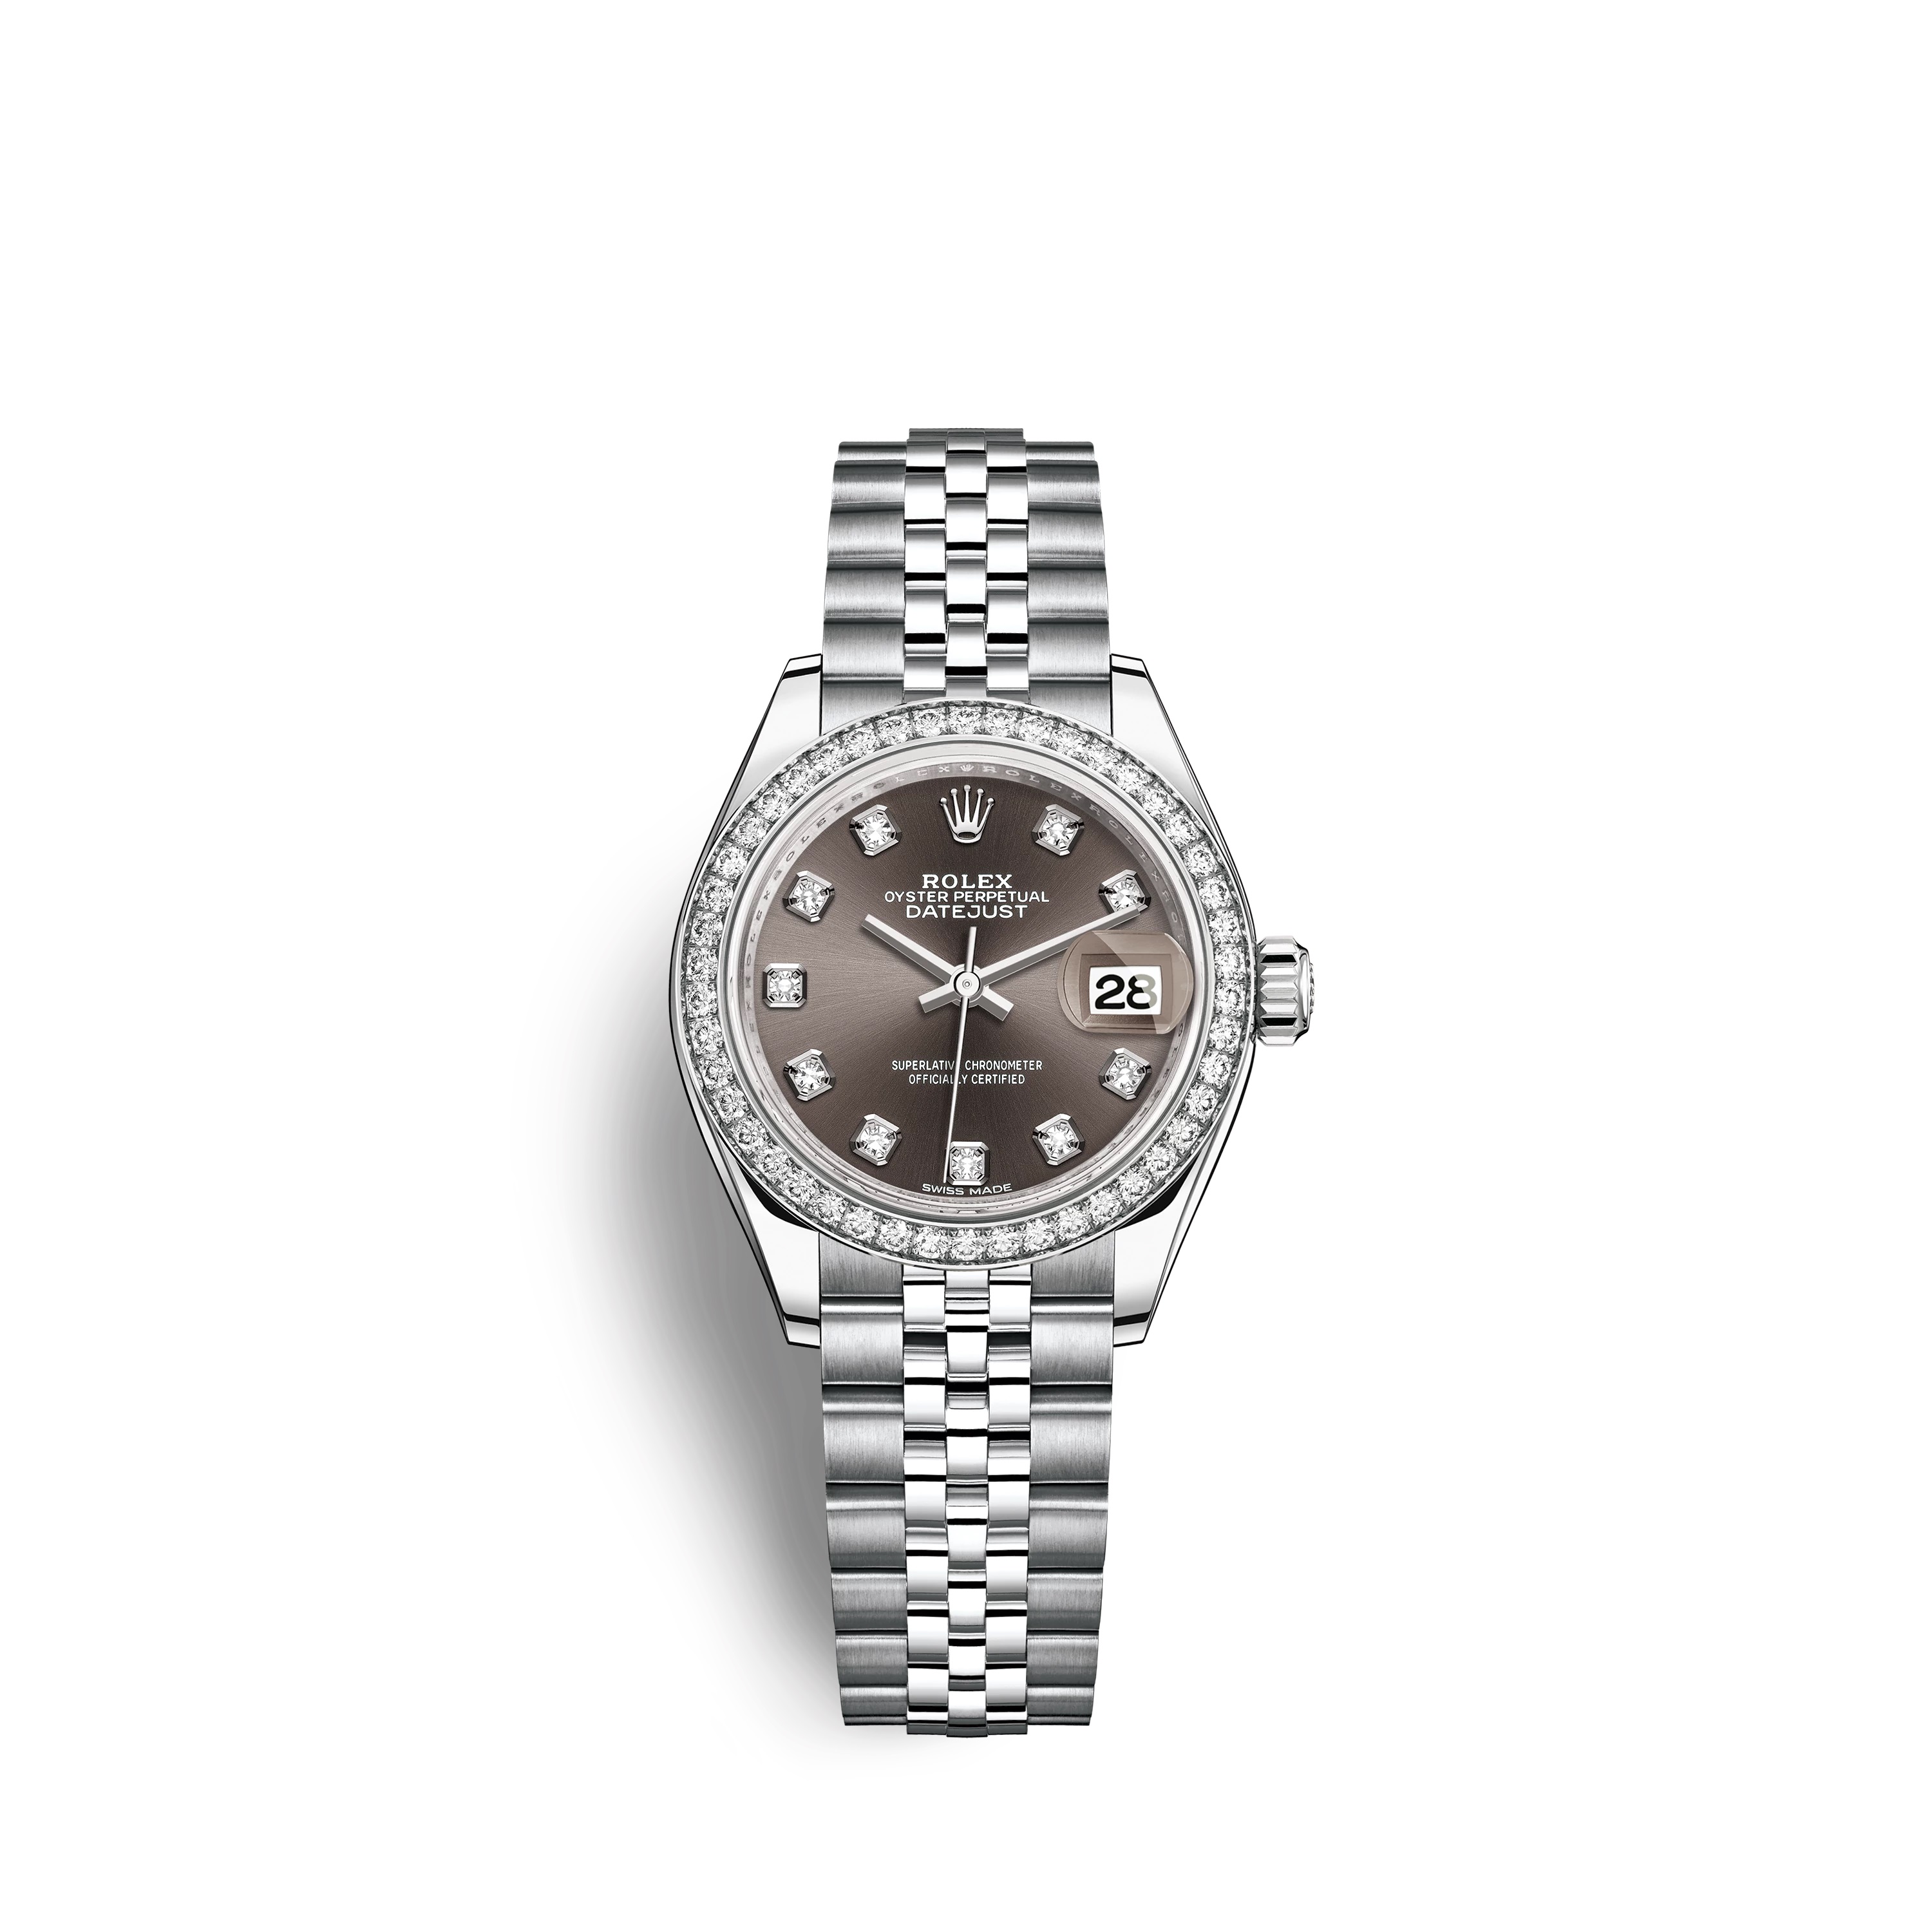 Lady-Datejust 28 279384RBR White Gold & Stainless Steel Watch (Dark Grey Set with Diamonds)